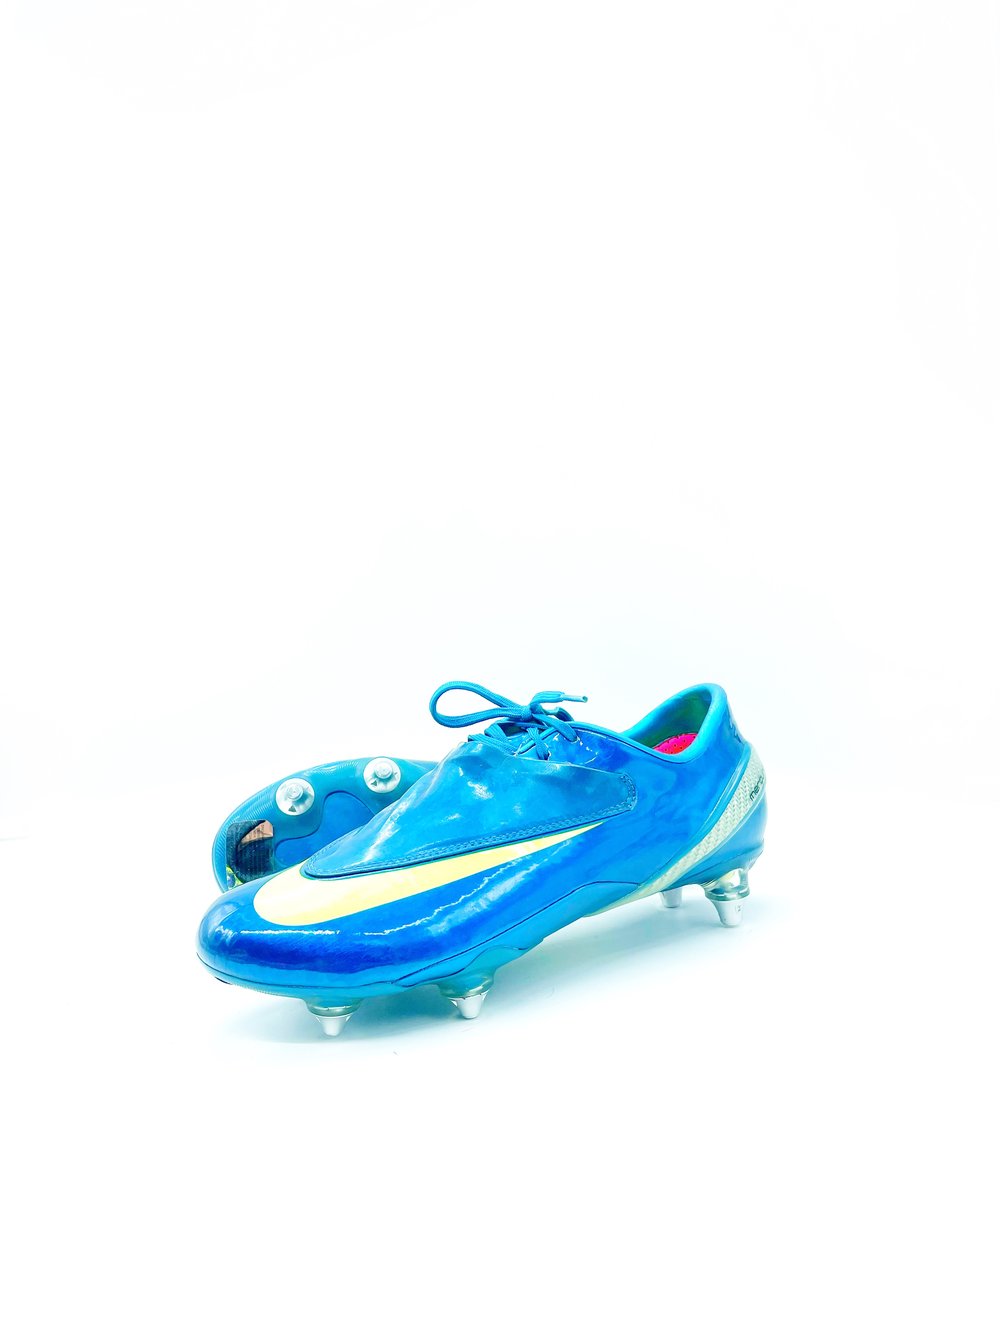 Image of Nike Vapor IV SG Or FG blue